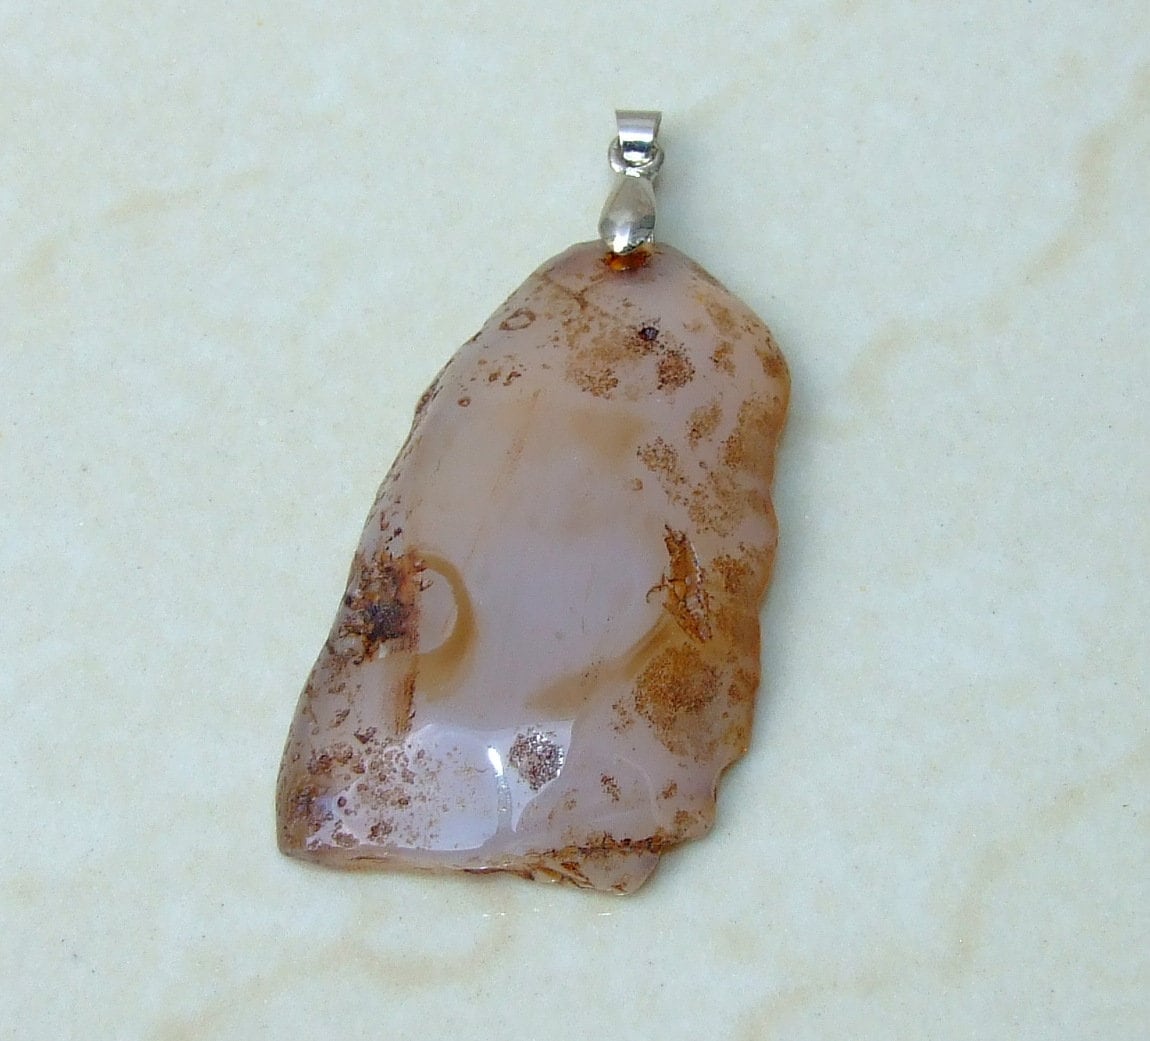 Natural Dendritic Agate Pendant, Gemstone Pendant, Agate Slice Pendant, Jewelry Stone Pendant, Agate Necklace Pendant - 26mm x 48mm - 6918